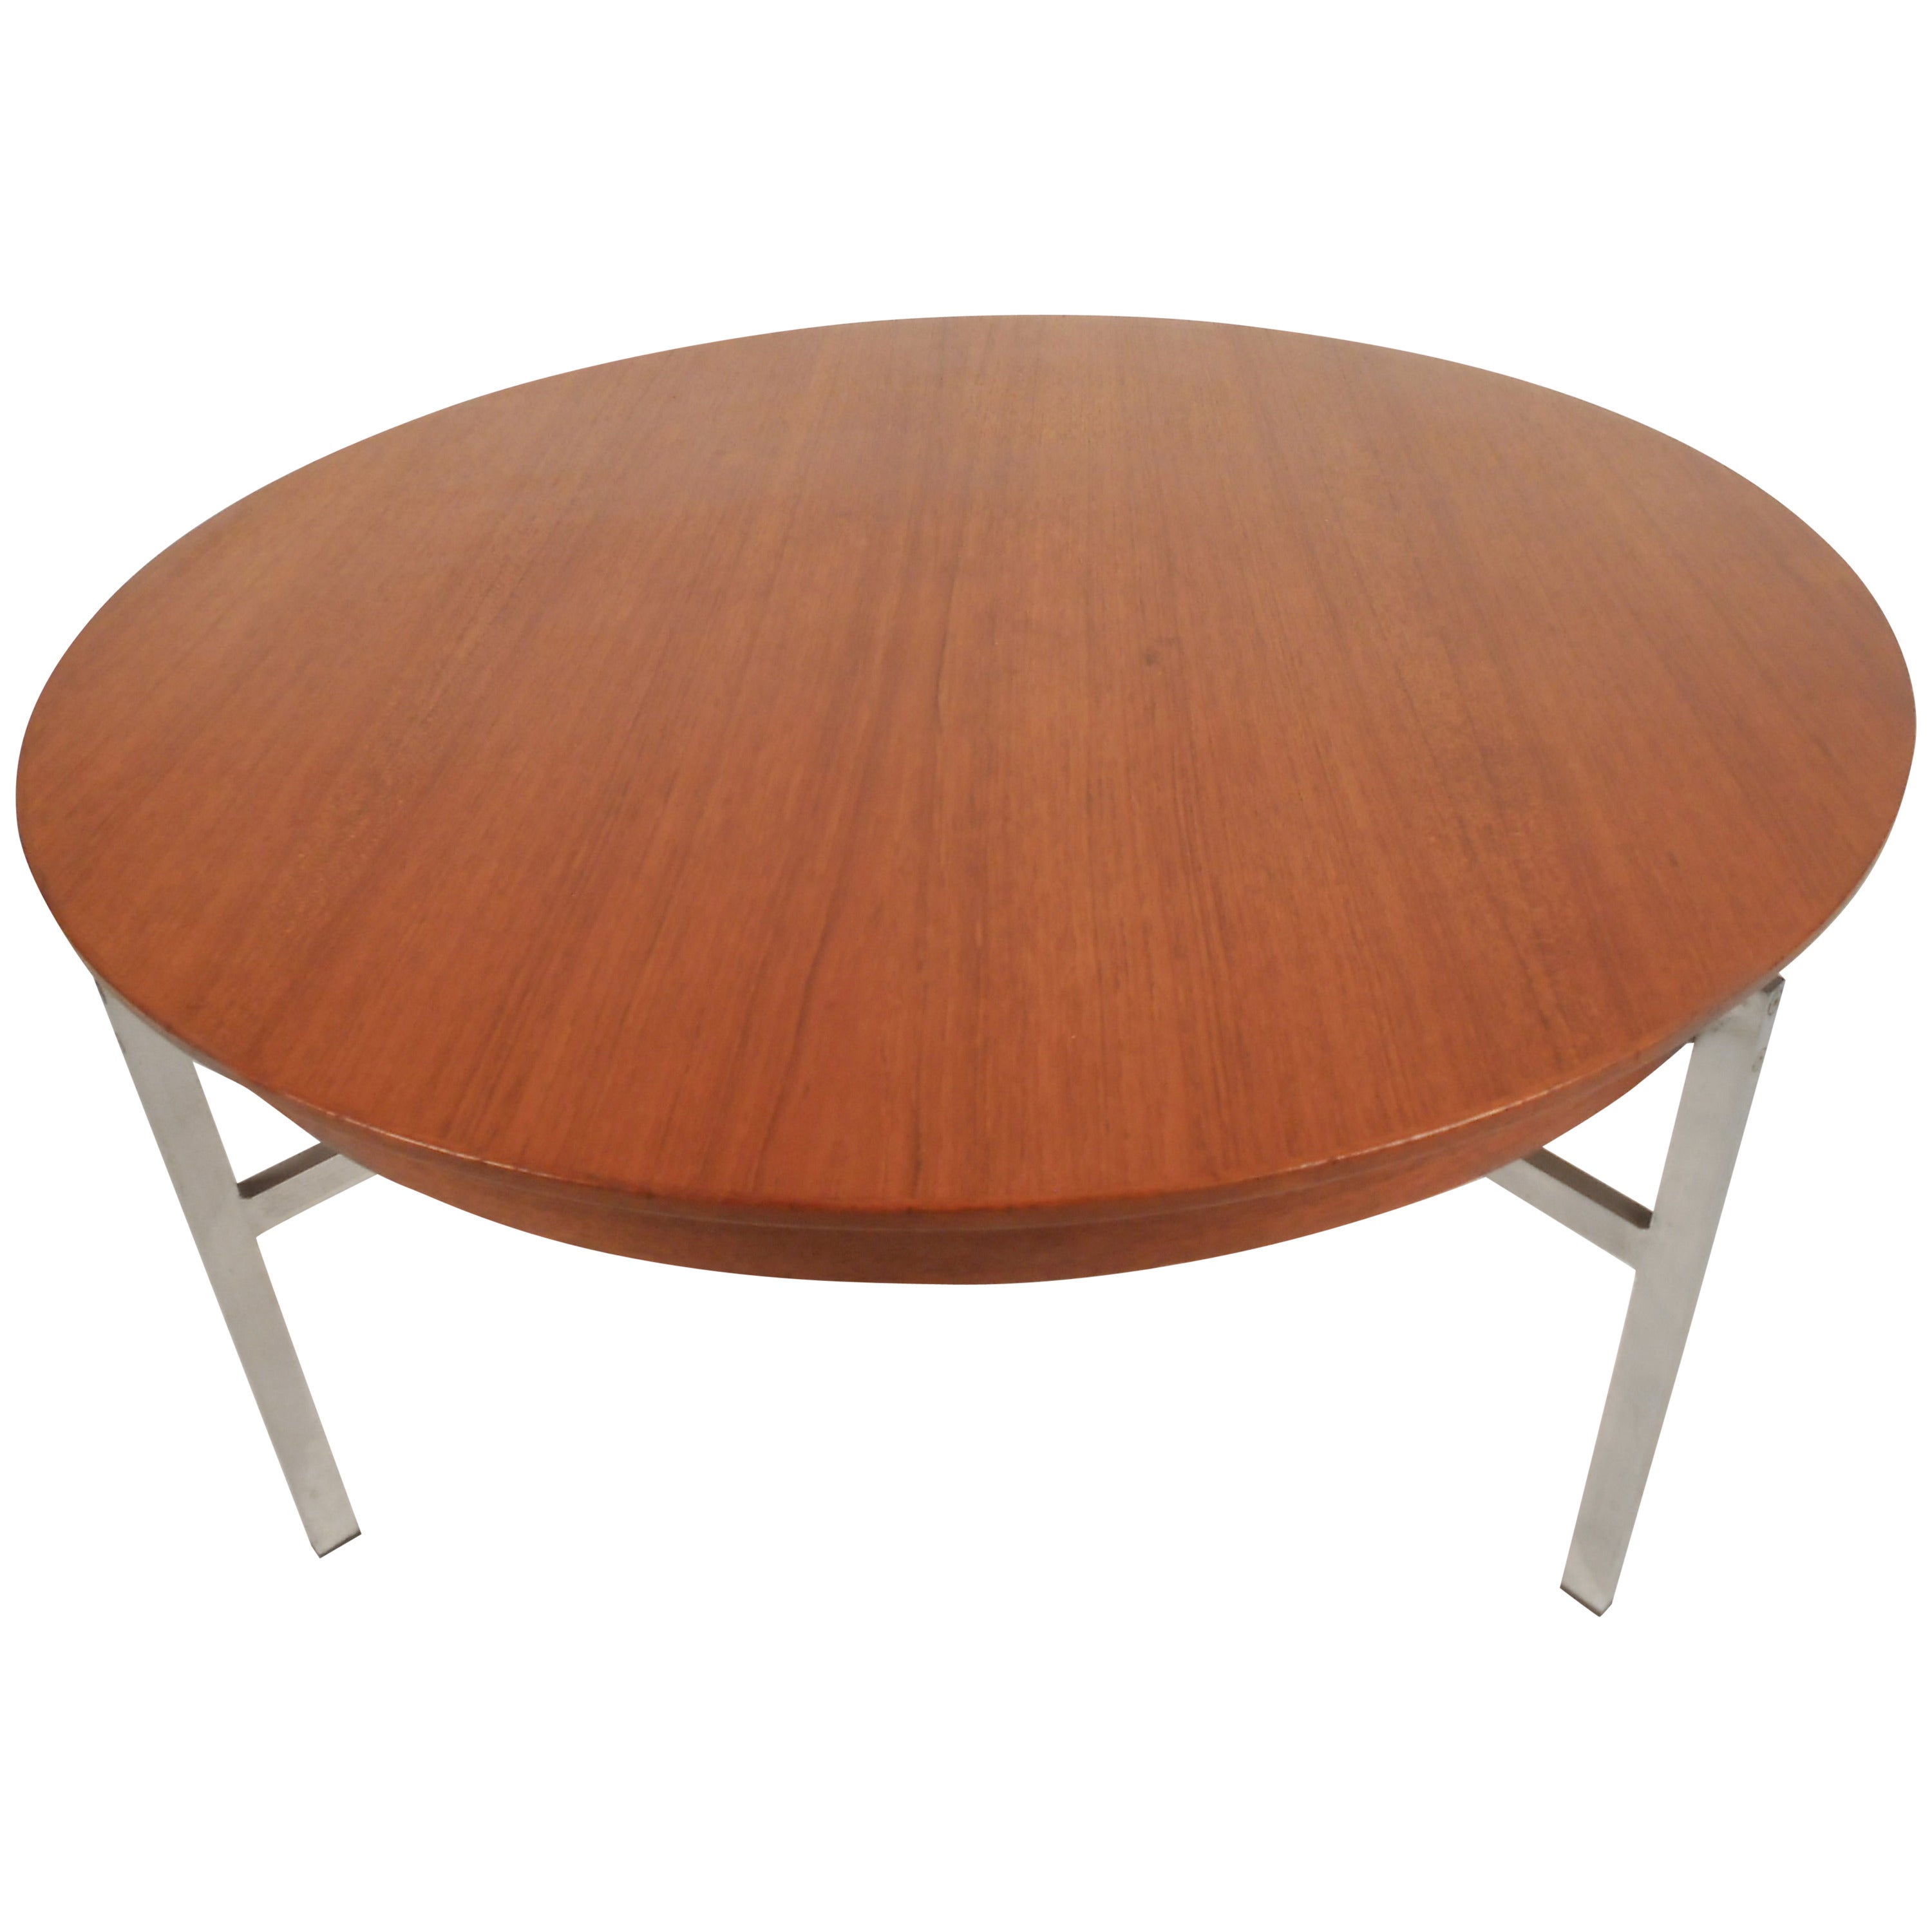 Mid-Century Modern Teak and Steel Coffee Table For Sale